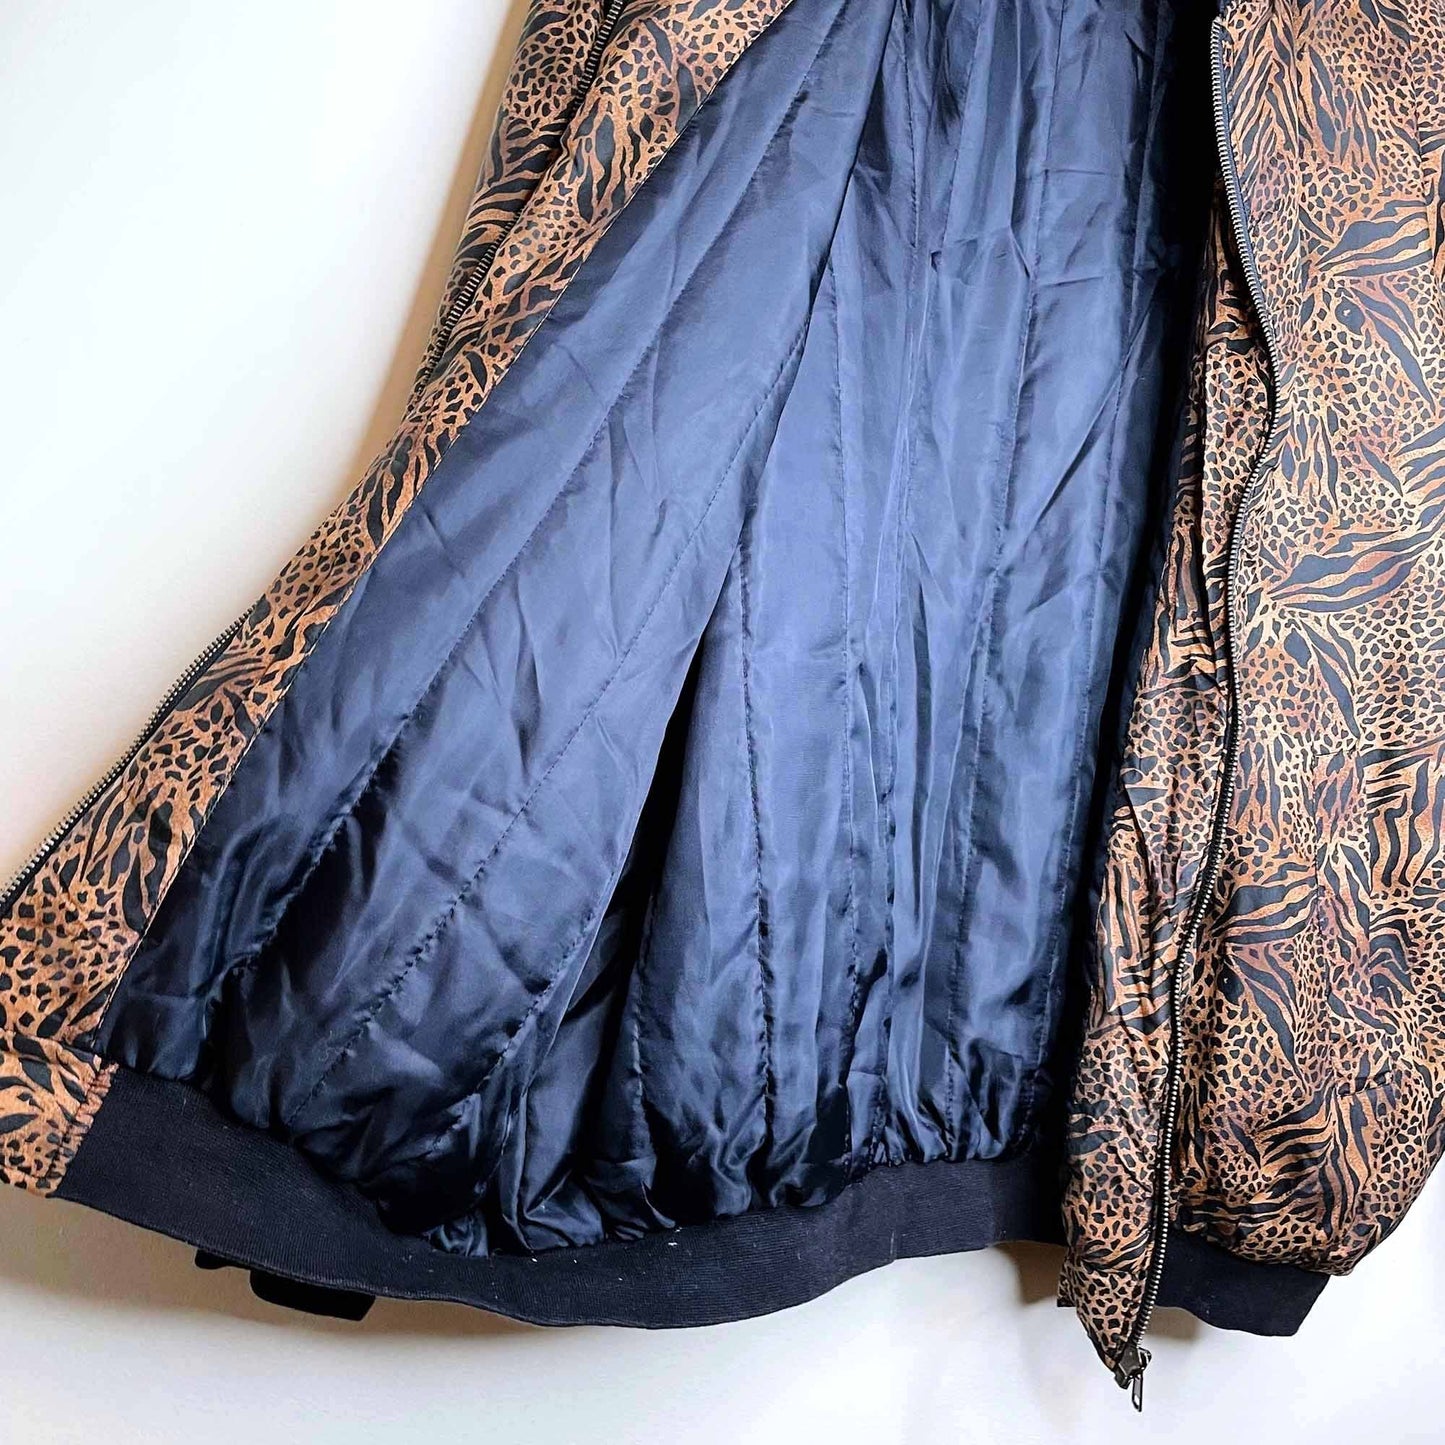 vintage 90's animal printed silk puffer bomber jacket - size large